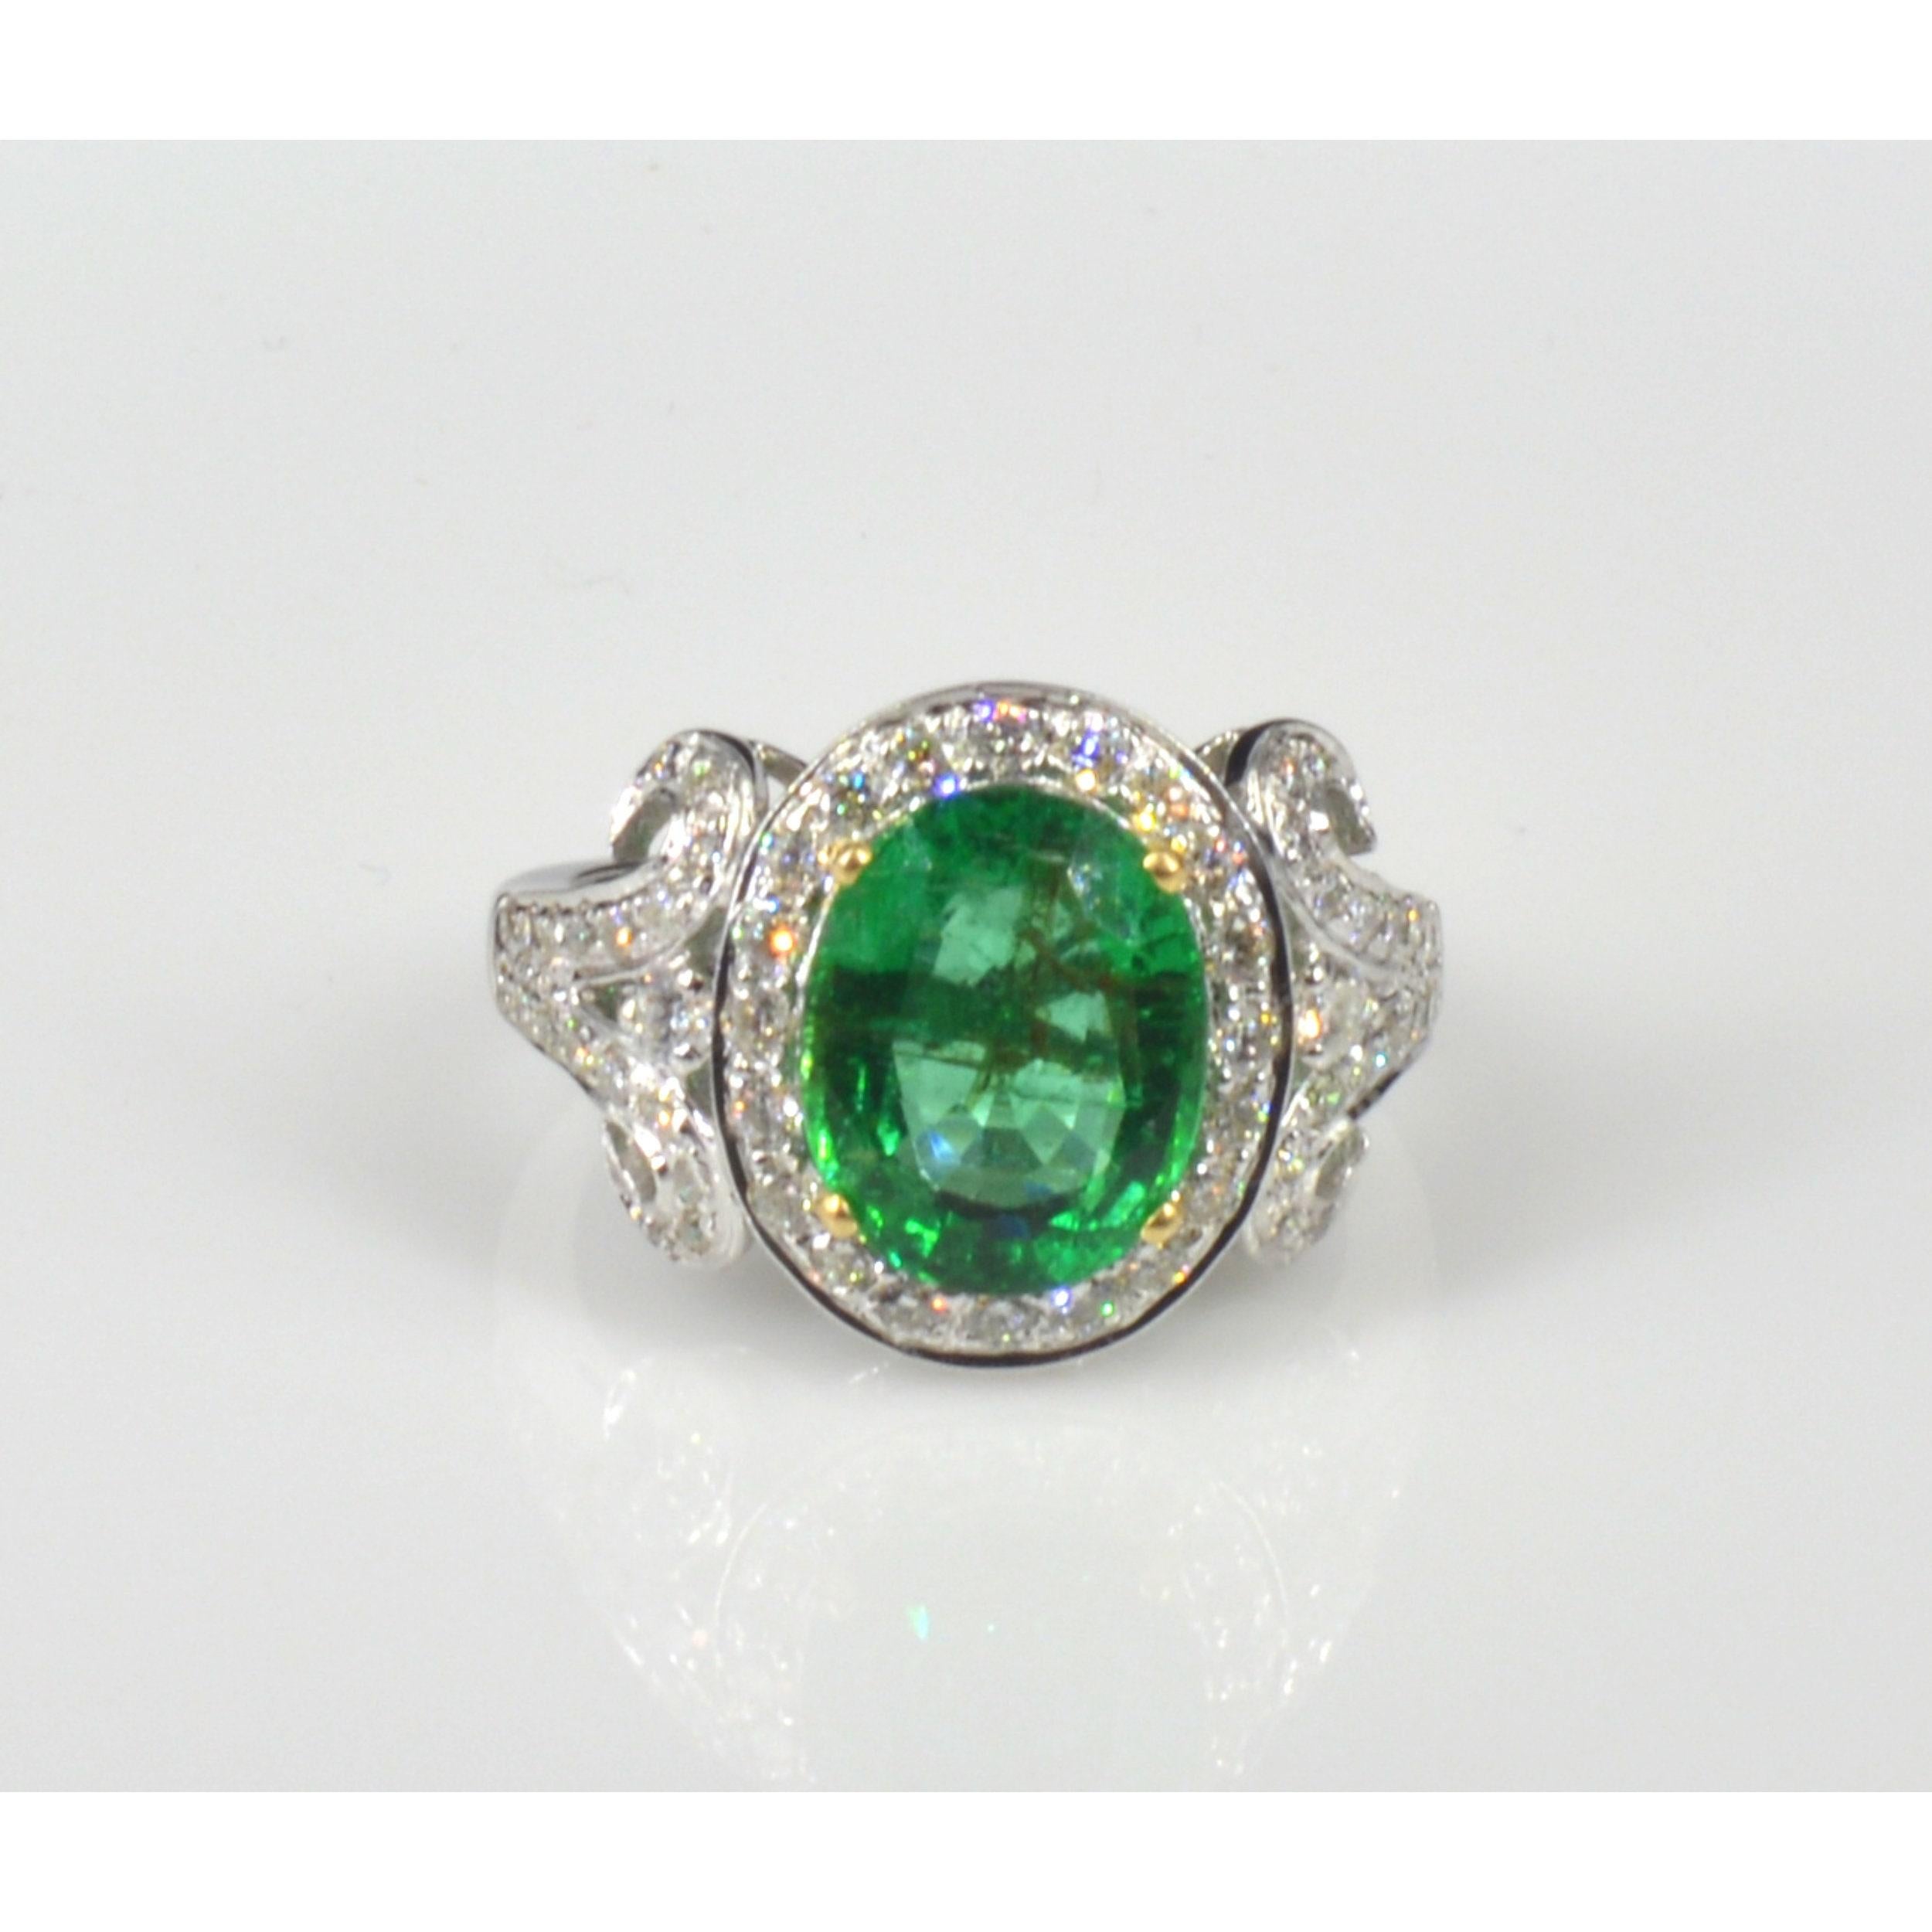 For Sale:  Antique 3 Carat Emerald Diamond Engagement Ring, Art Deco Diamond Wedding Ring